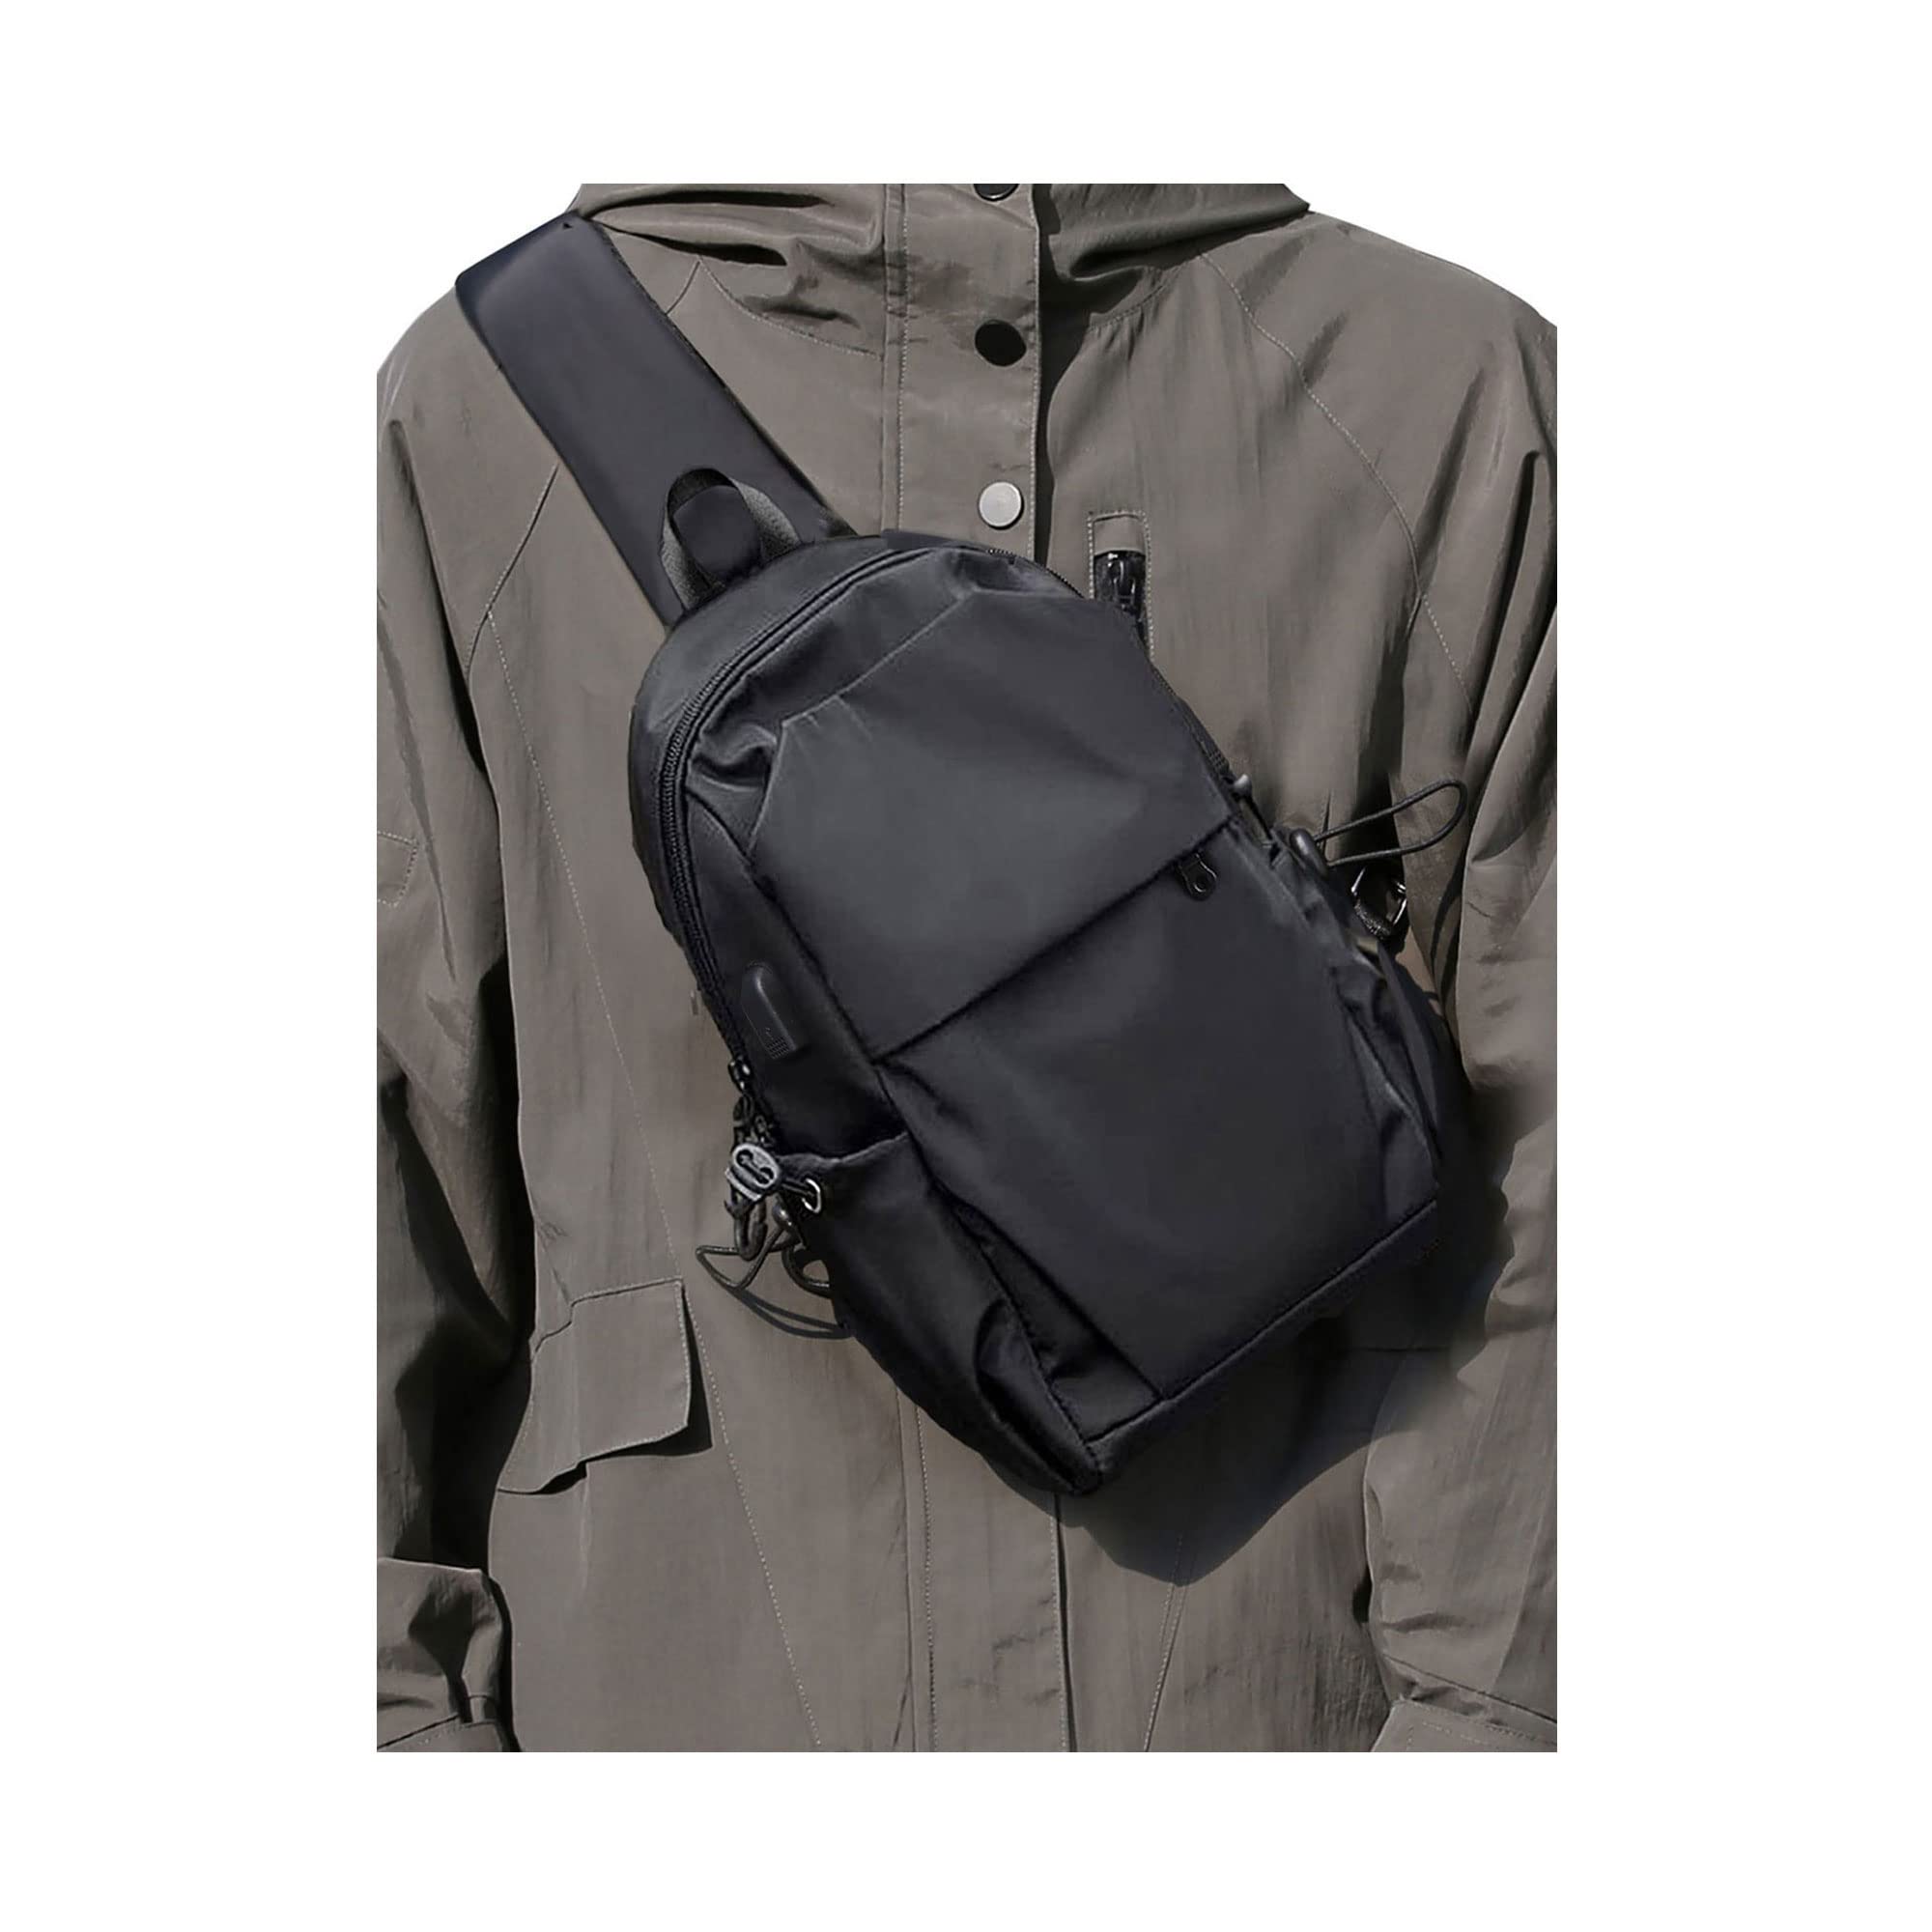 Sling Backpack with USB Charging Port, Chest Bag Crossbody Daypack Shoulder  Bag for Women & Men, Hiking, Cycling, Travel